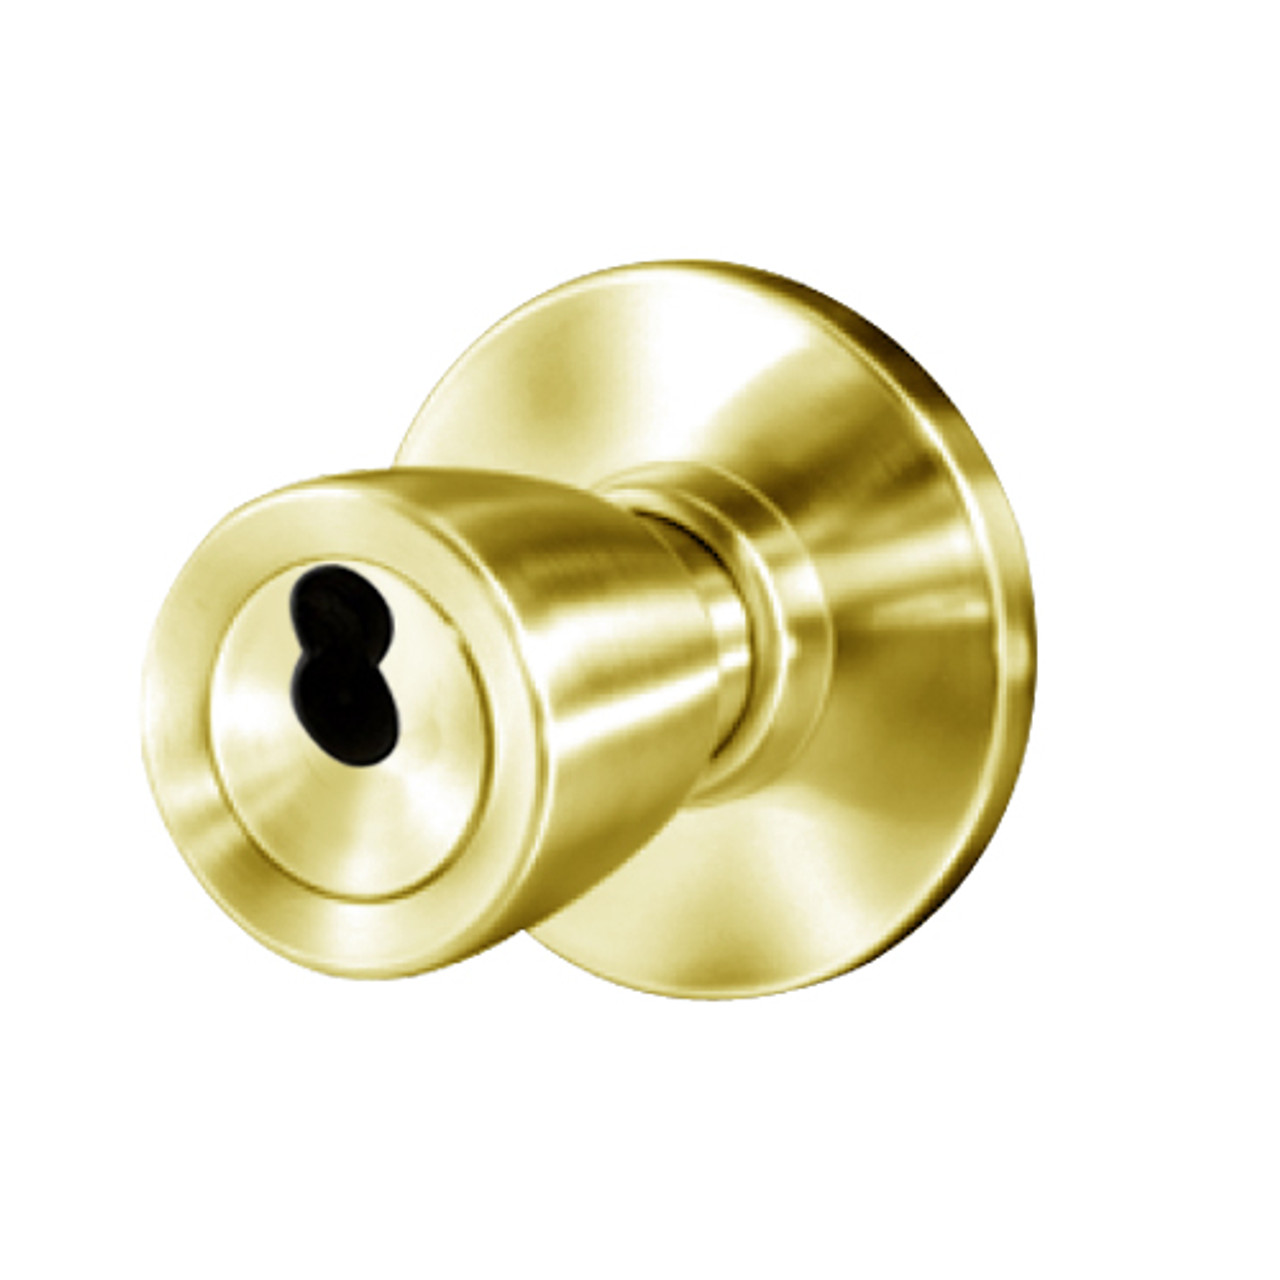 8K47YD6ASTK605 Best 8K Series Exit Heavy Duty Cylindrical Knob Locks with Tulip Style in Bright Brass